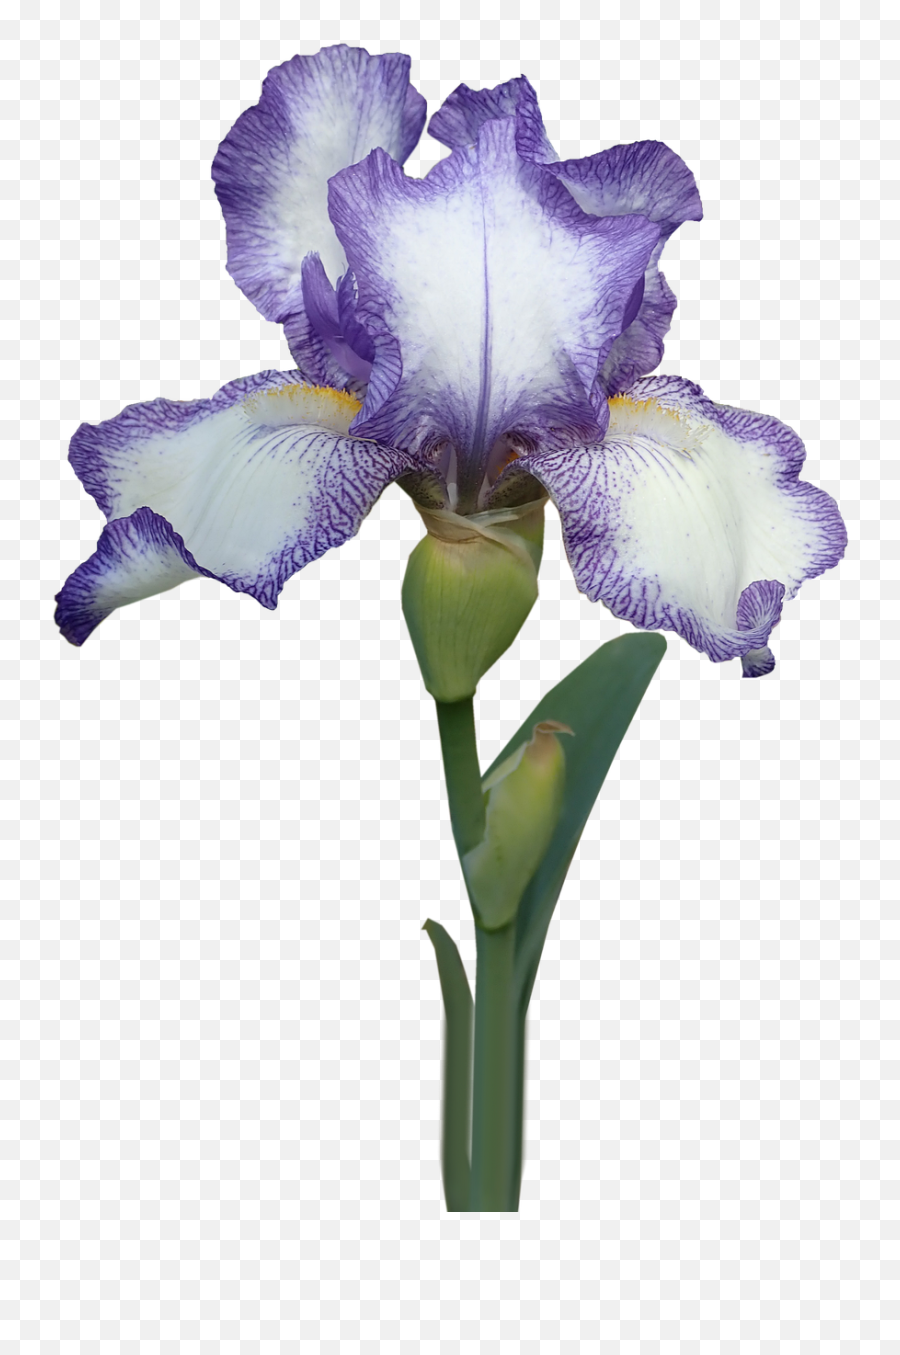 Flower Iris Stem - Free Photo On Pixabay Iris Flower With Stem Png,Iris Flower Png